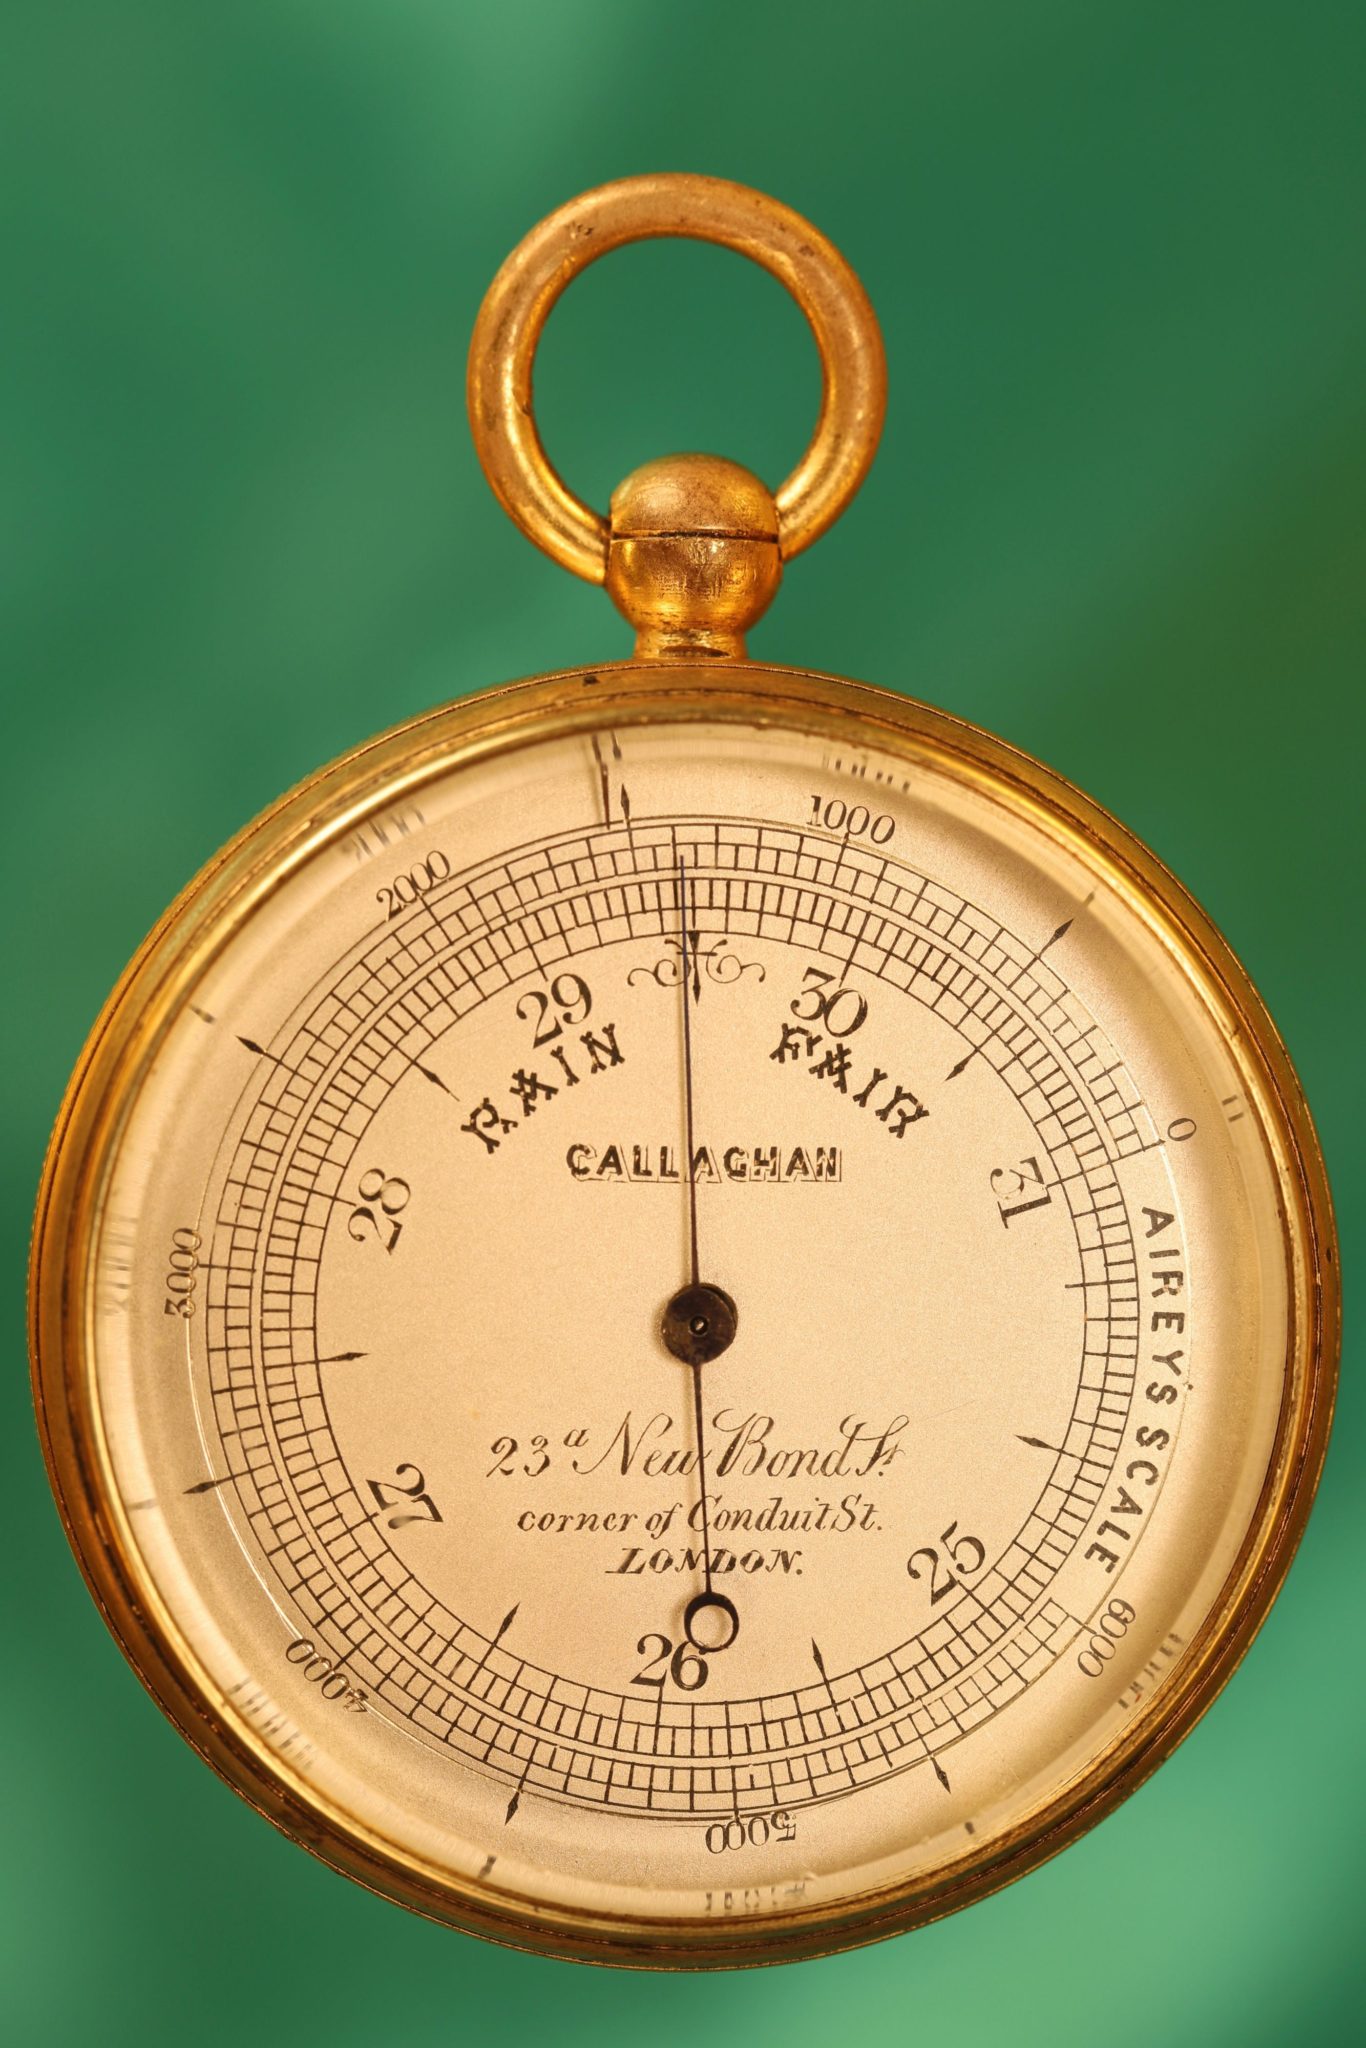 Callaghan Miniature Pocket Barometer No 4811